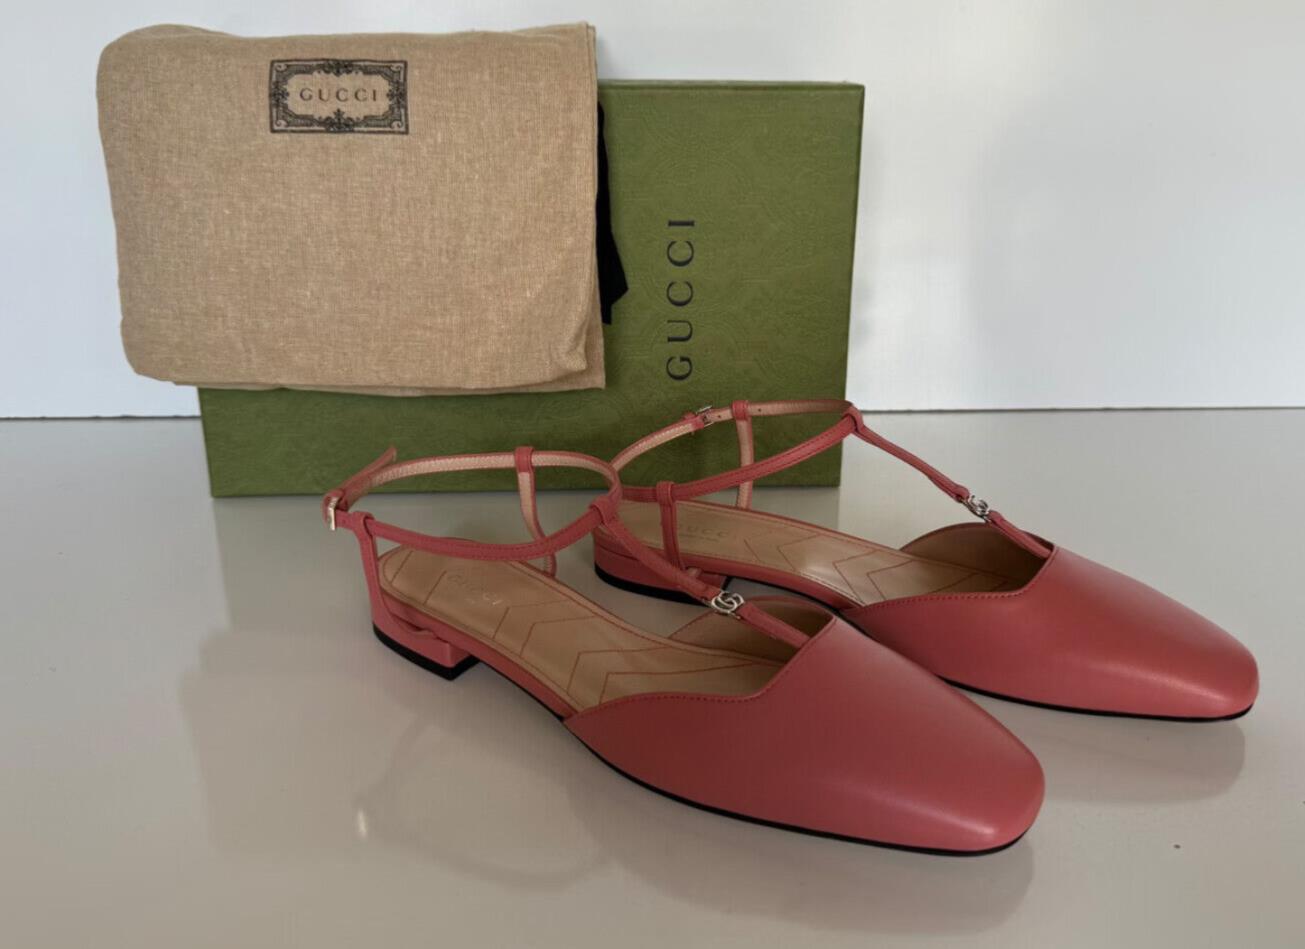 Gucci Women's GG Pink Ballet Flat Leather Sandals 9.5 US (39.5 Eu) IT 754136 NIB